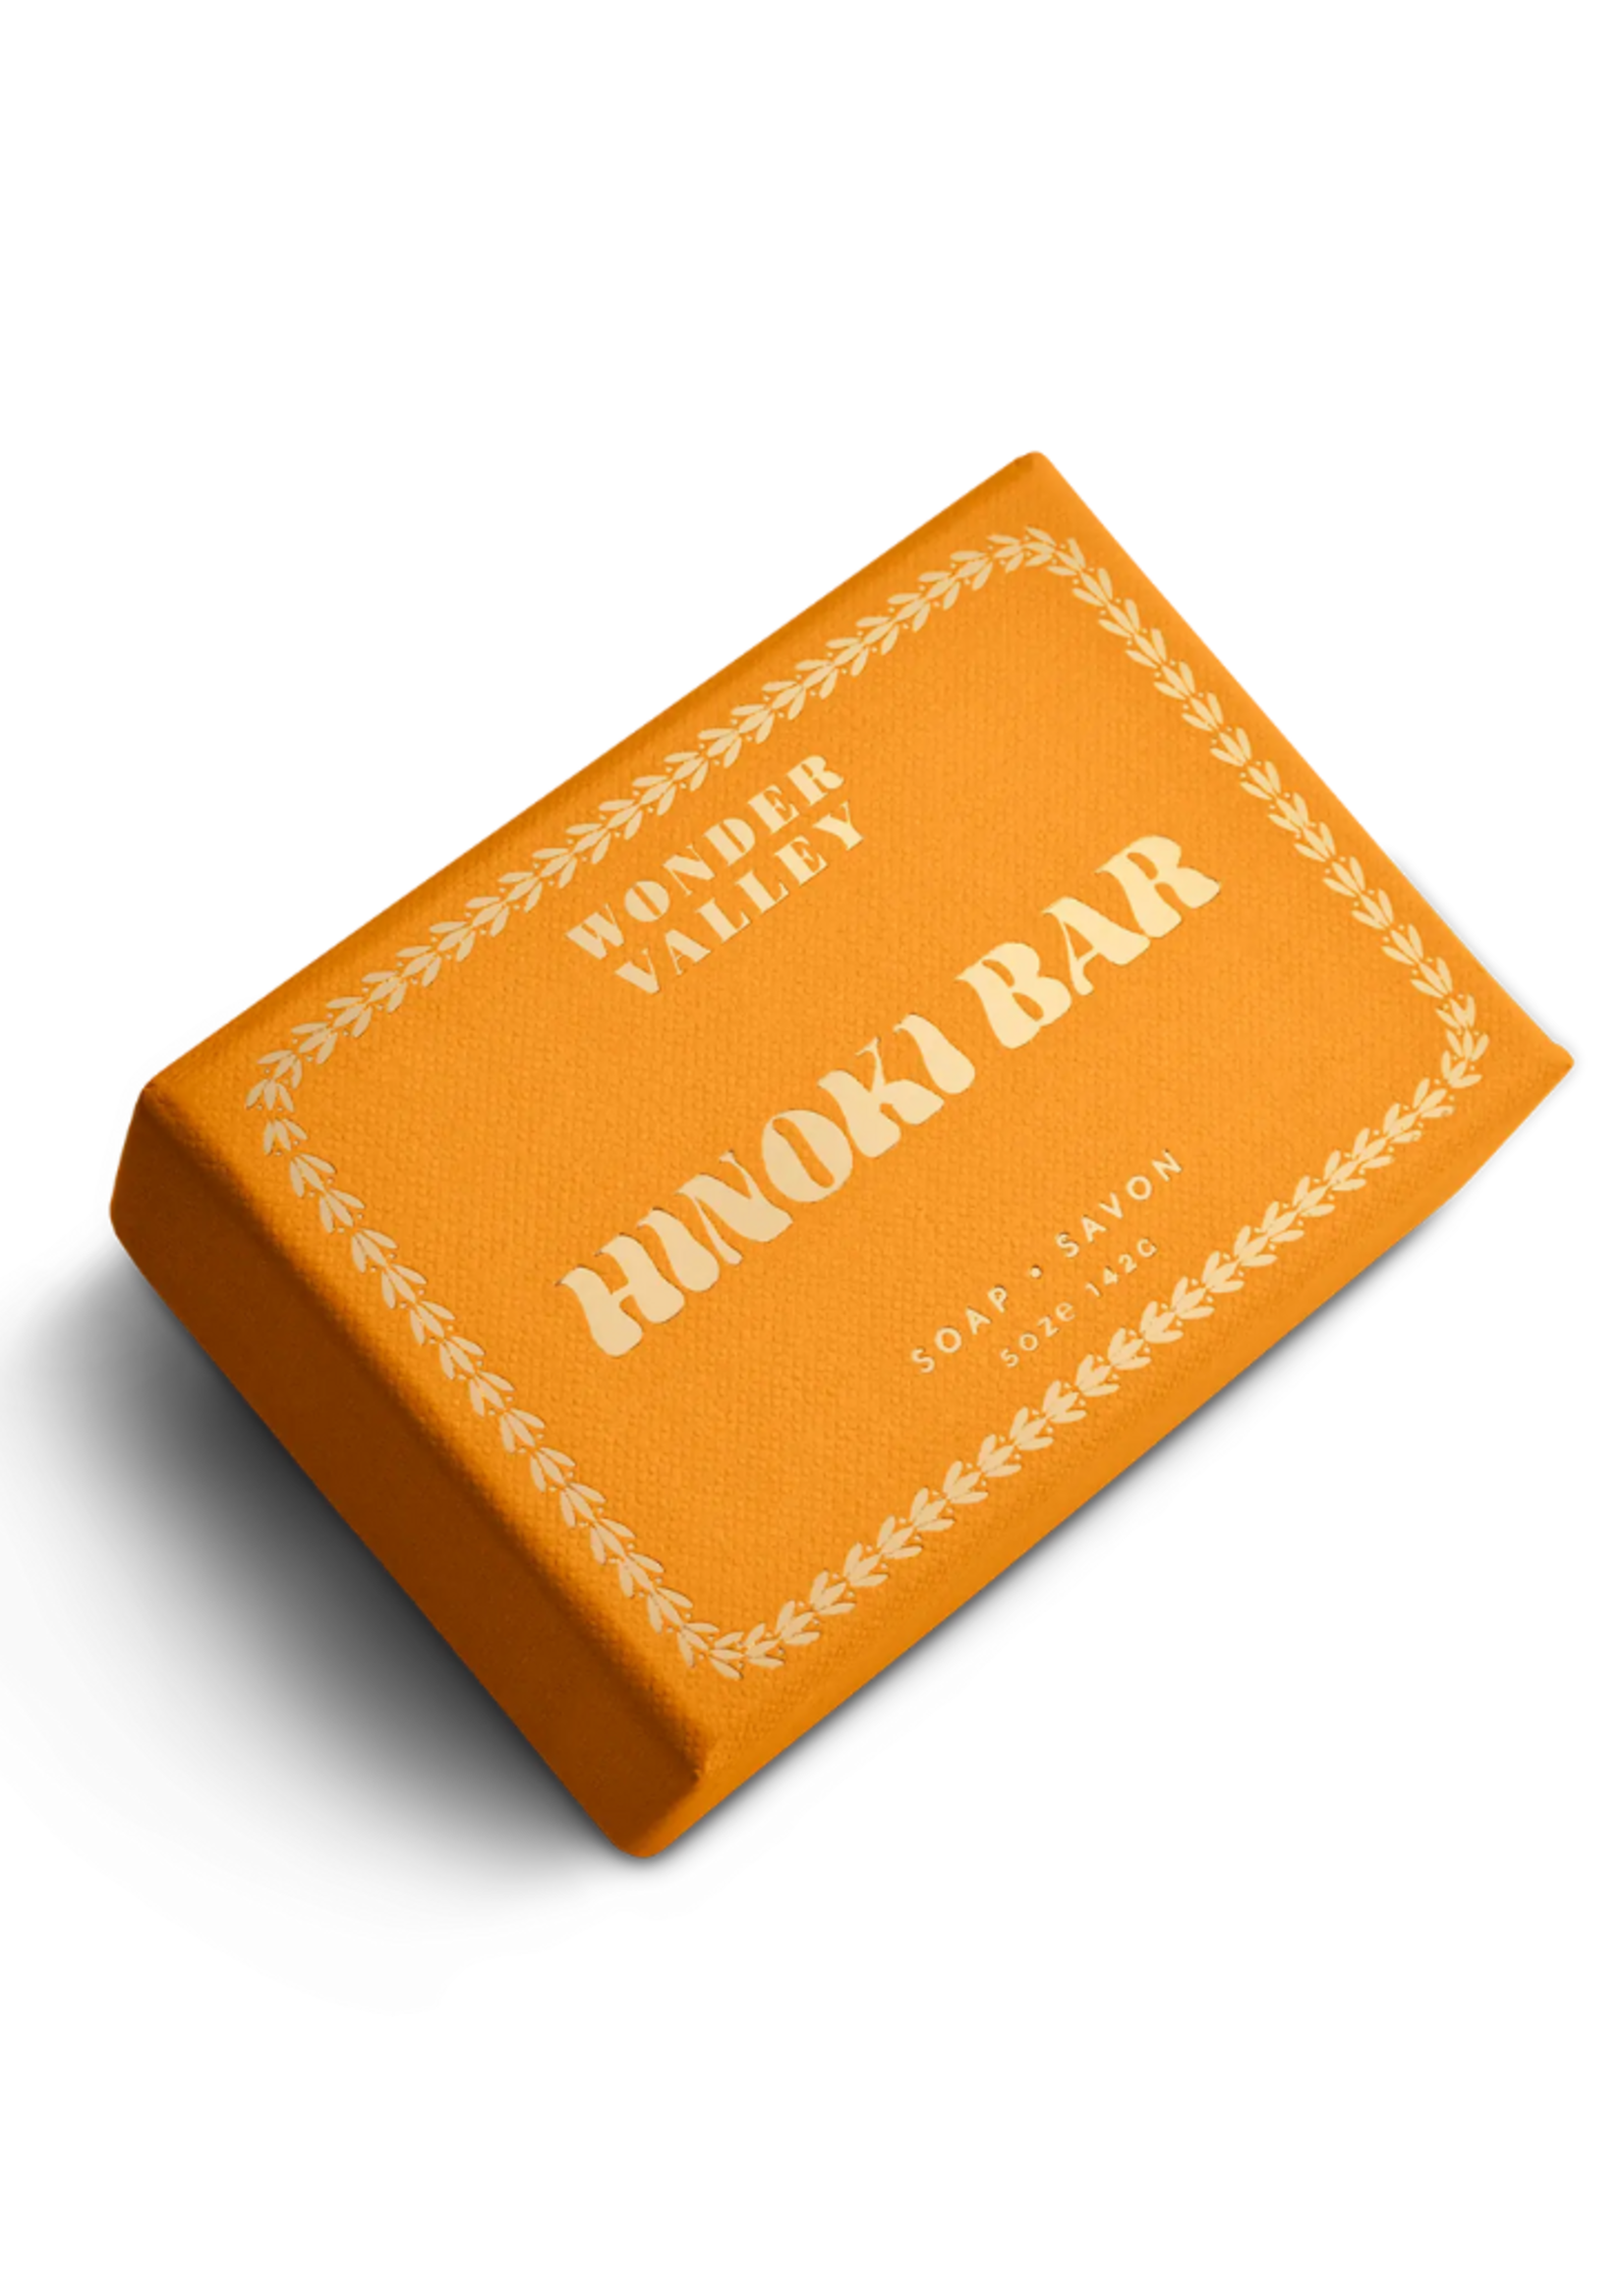 Wonder Valley Hinoki Bar Soap